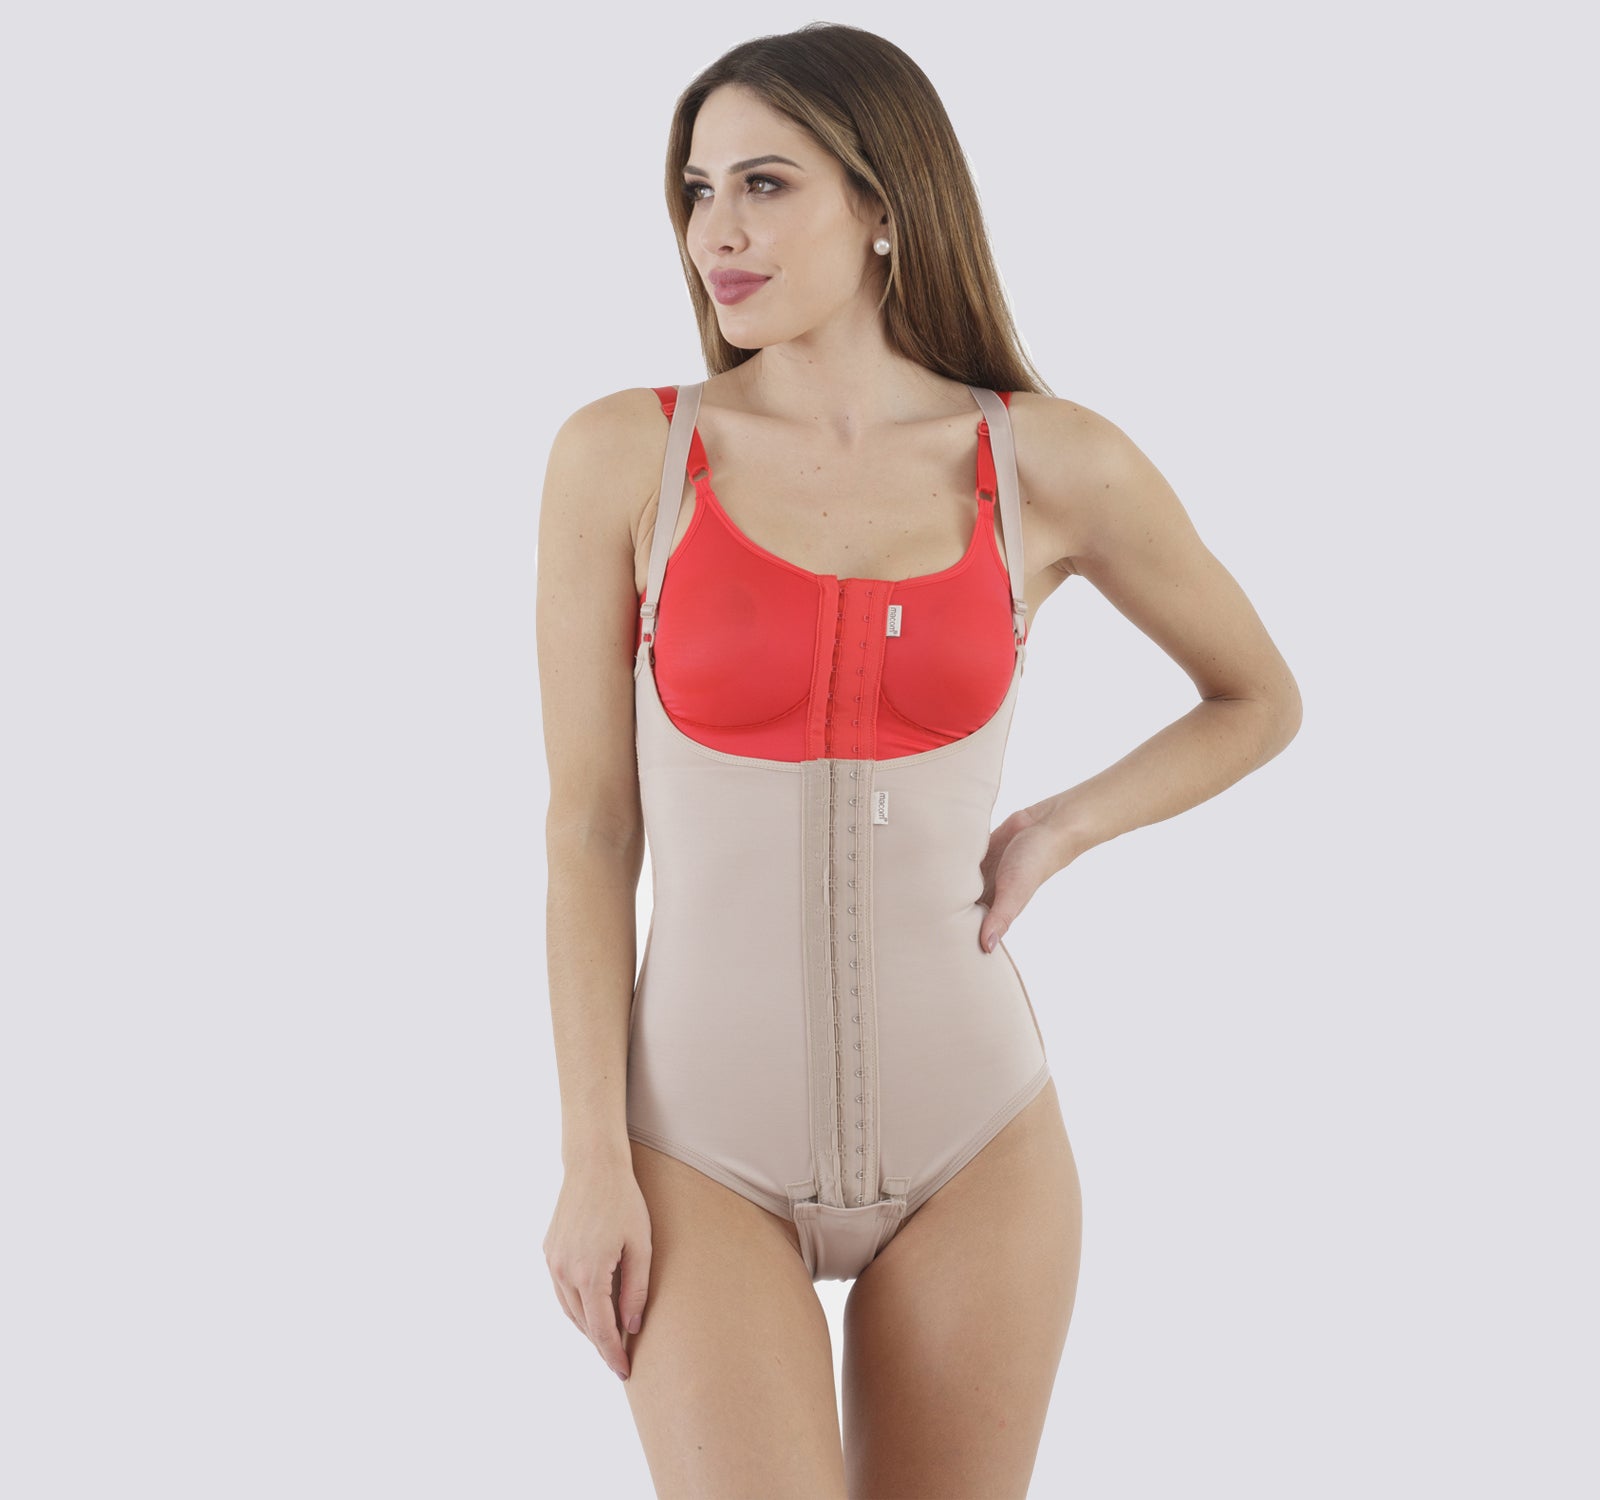 Women Body Shaper Compression Garment Abdomen Waist Liposuction